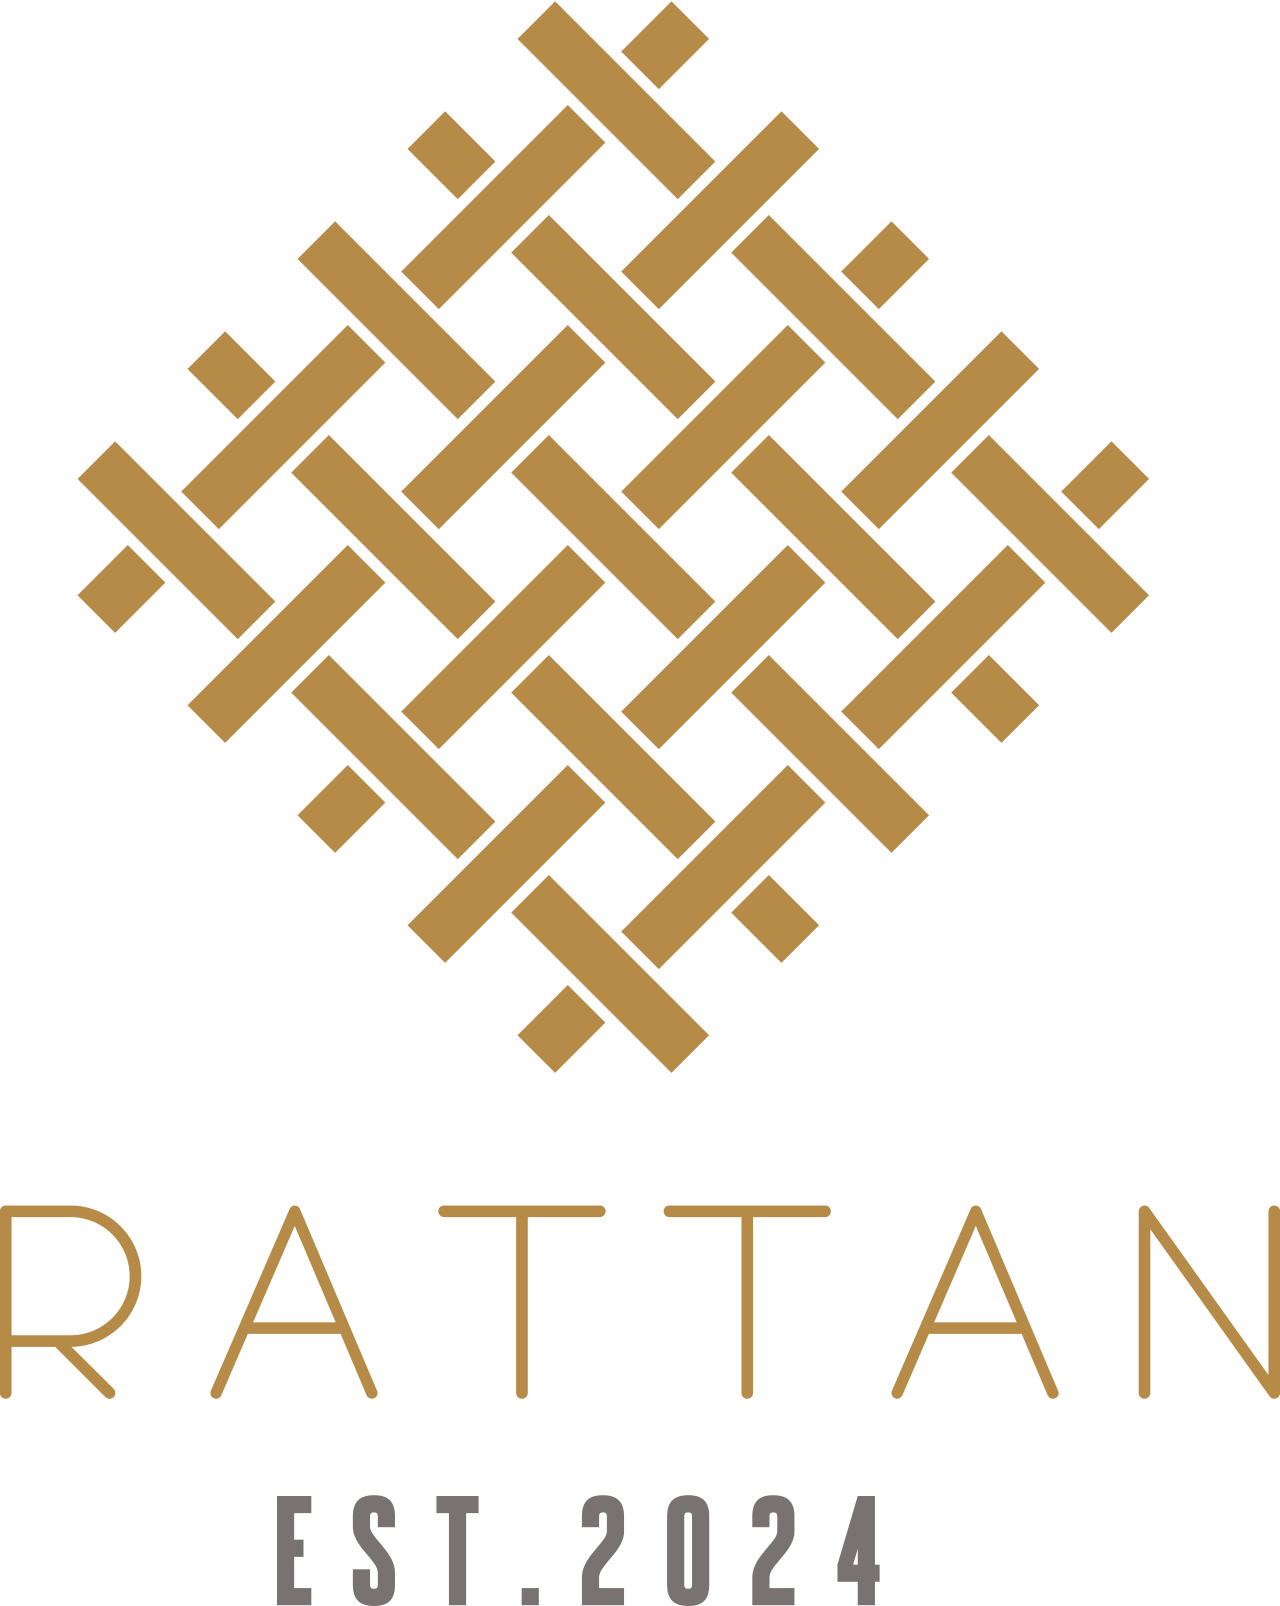 Rattan's logo